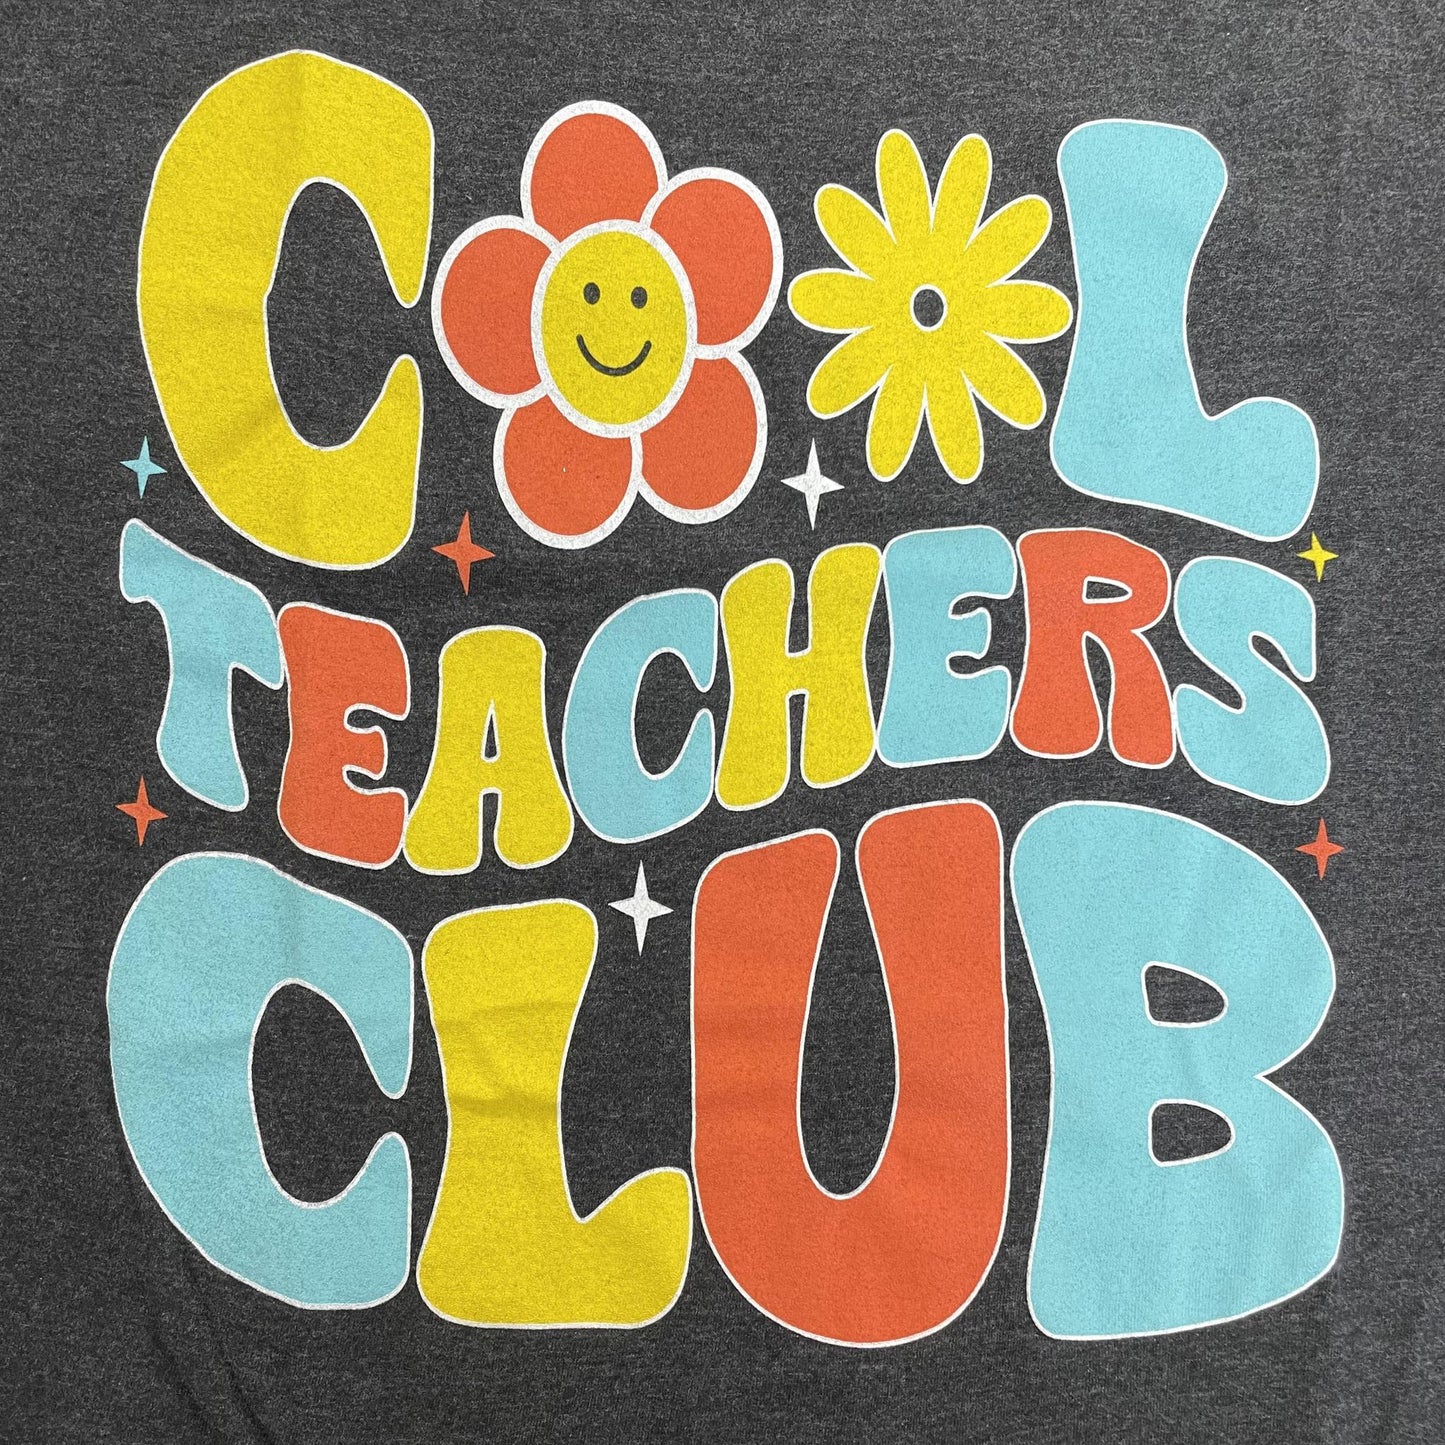 Cool Teacher Club- T-shirt